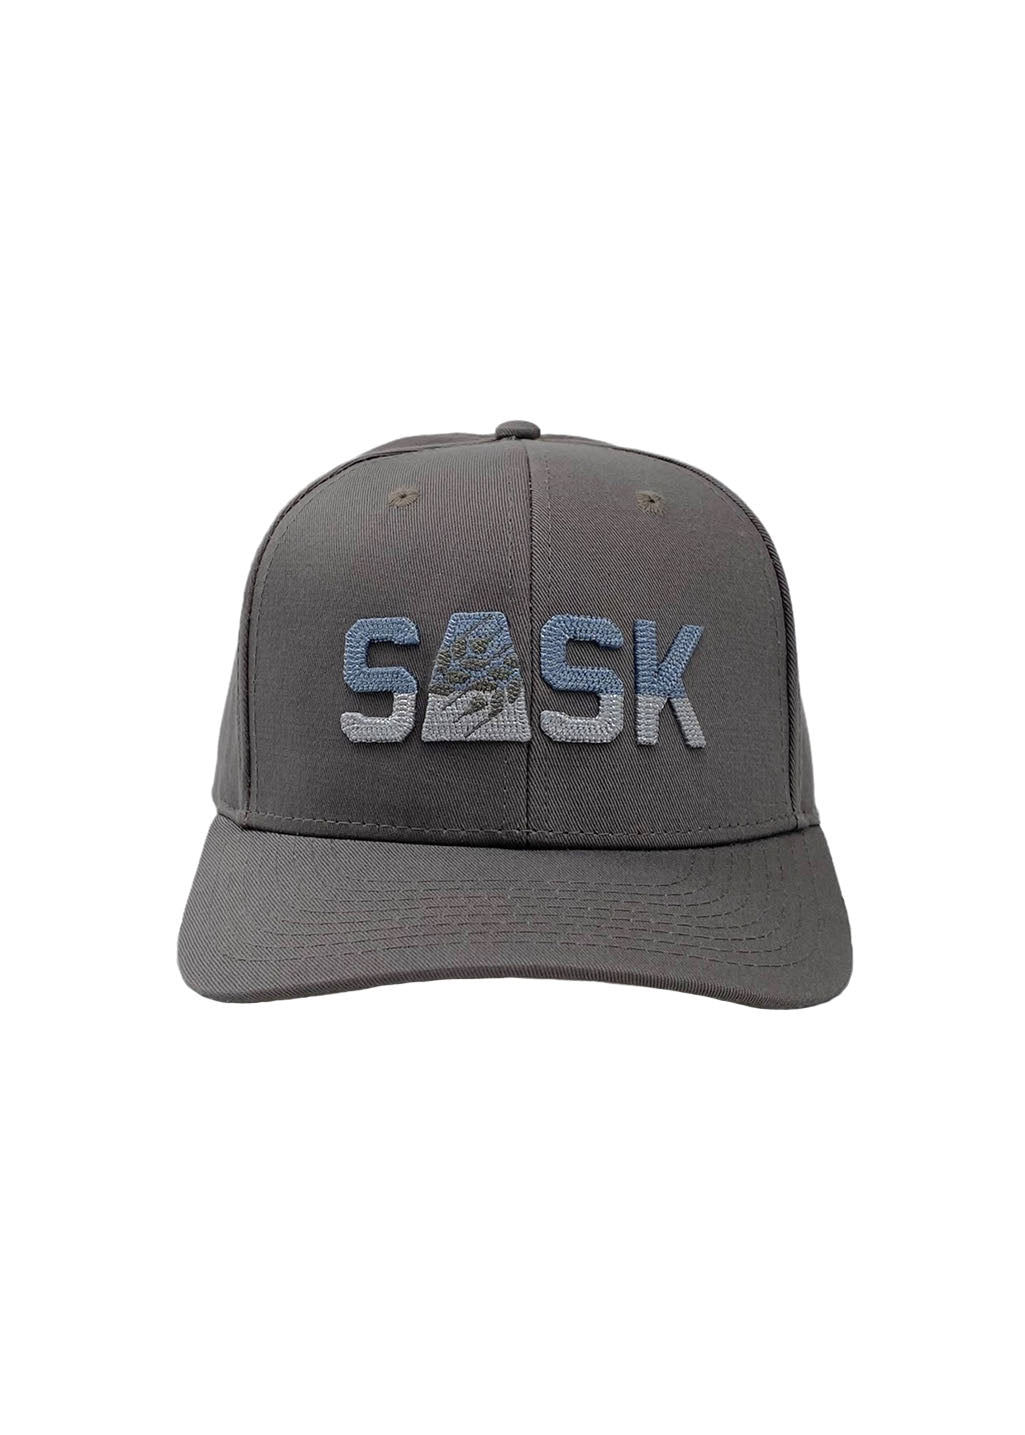 Sask Icon Snapback | Nickel/Slate - Hardpressed Print Studio Inc.